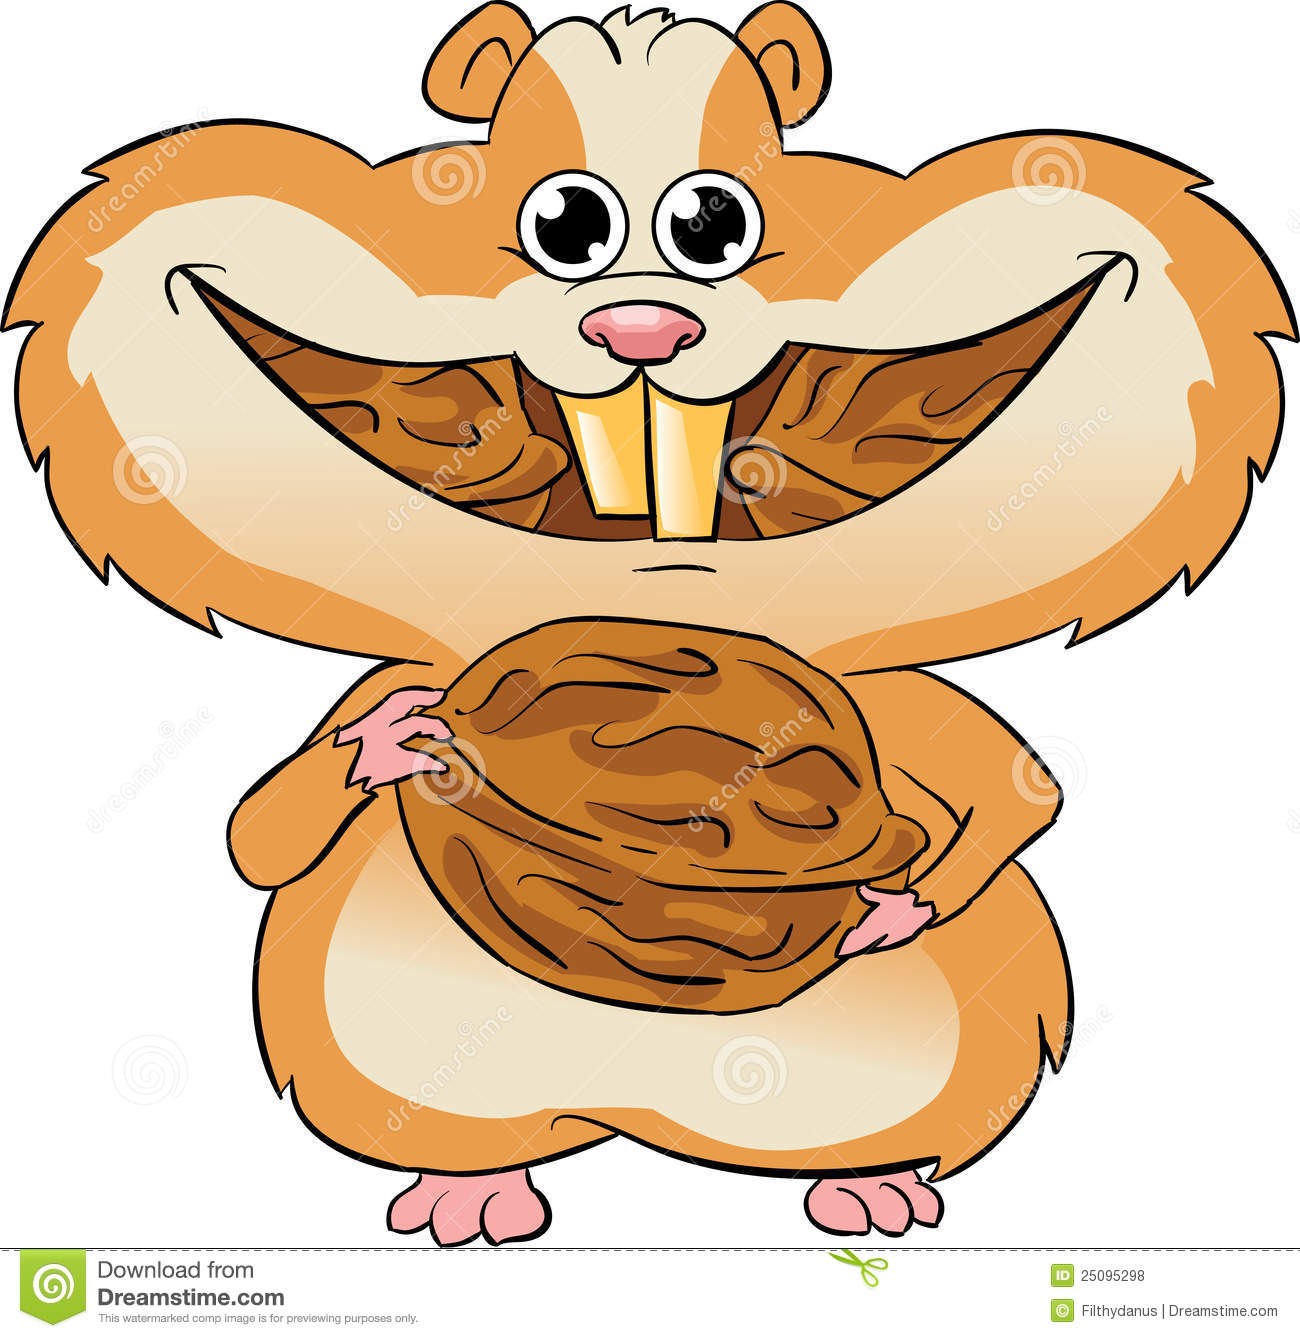 Hamster Eating Walnuts Royalty Free Stock Photos   Image  25095298